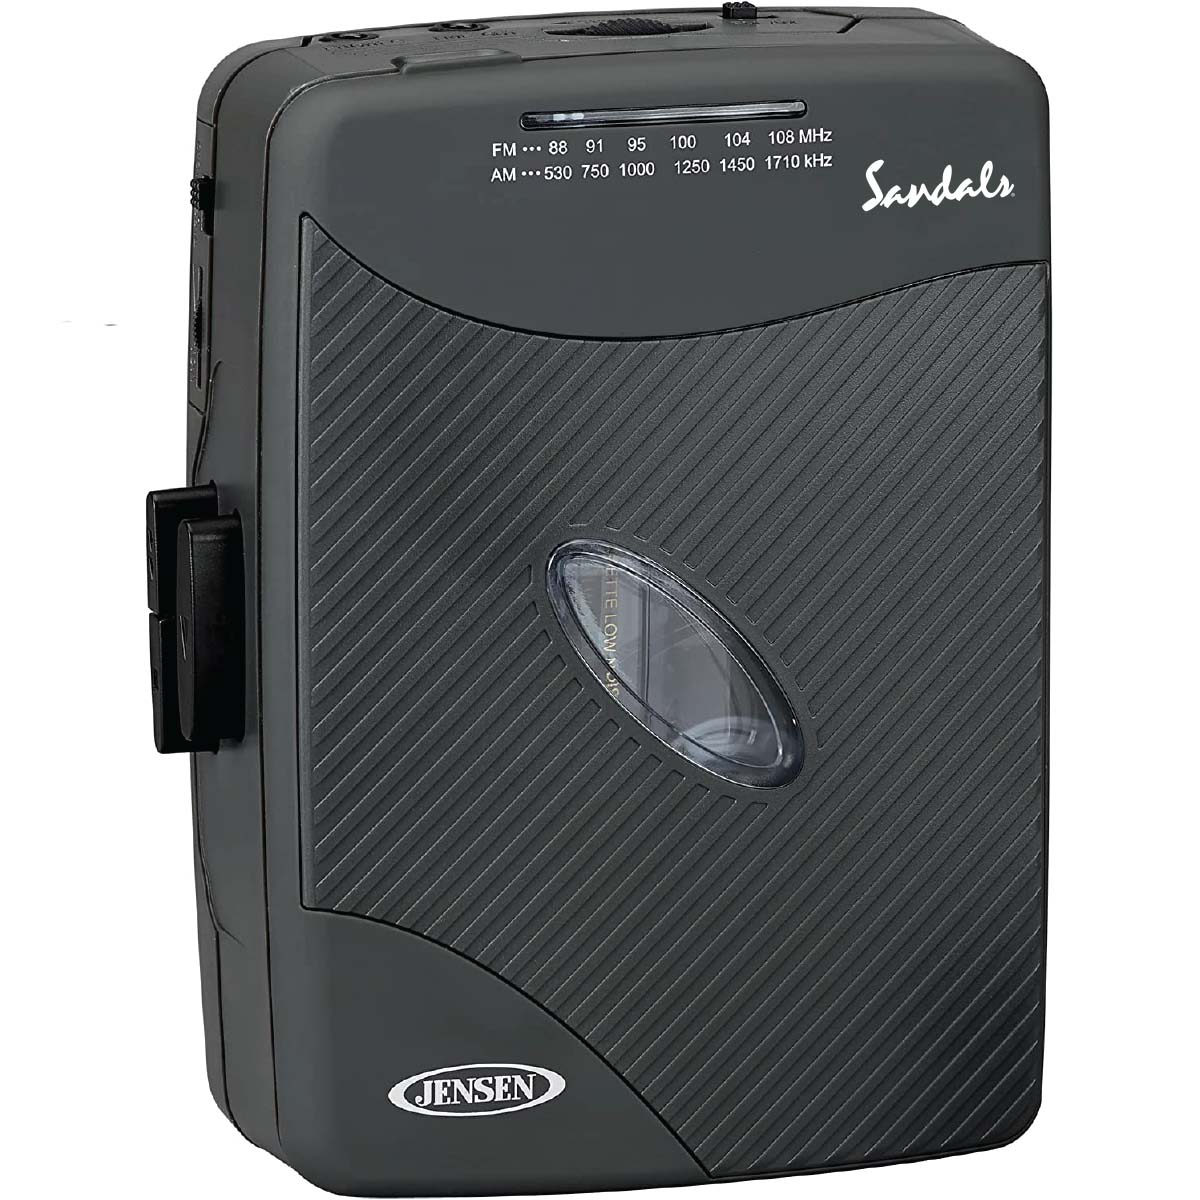 
                  
                    Jensen Audio Stereo Cassette Player with AM/FM Radio
                  
                